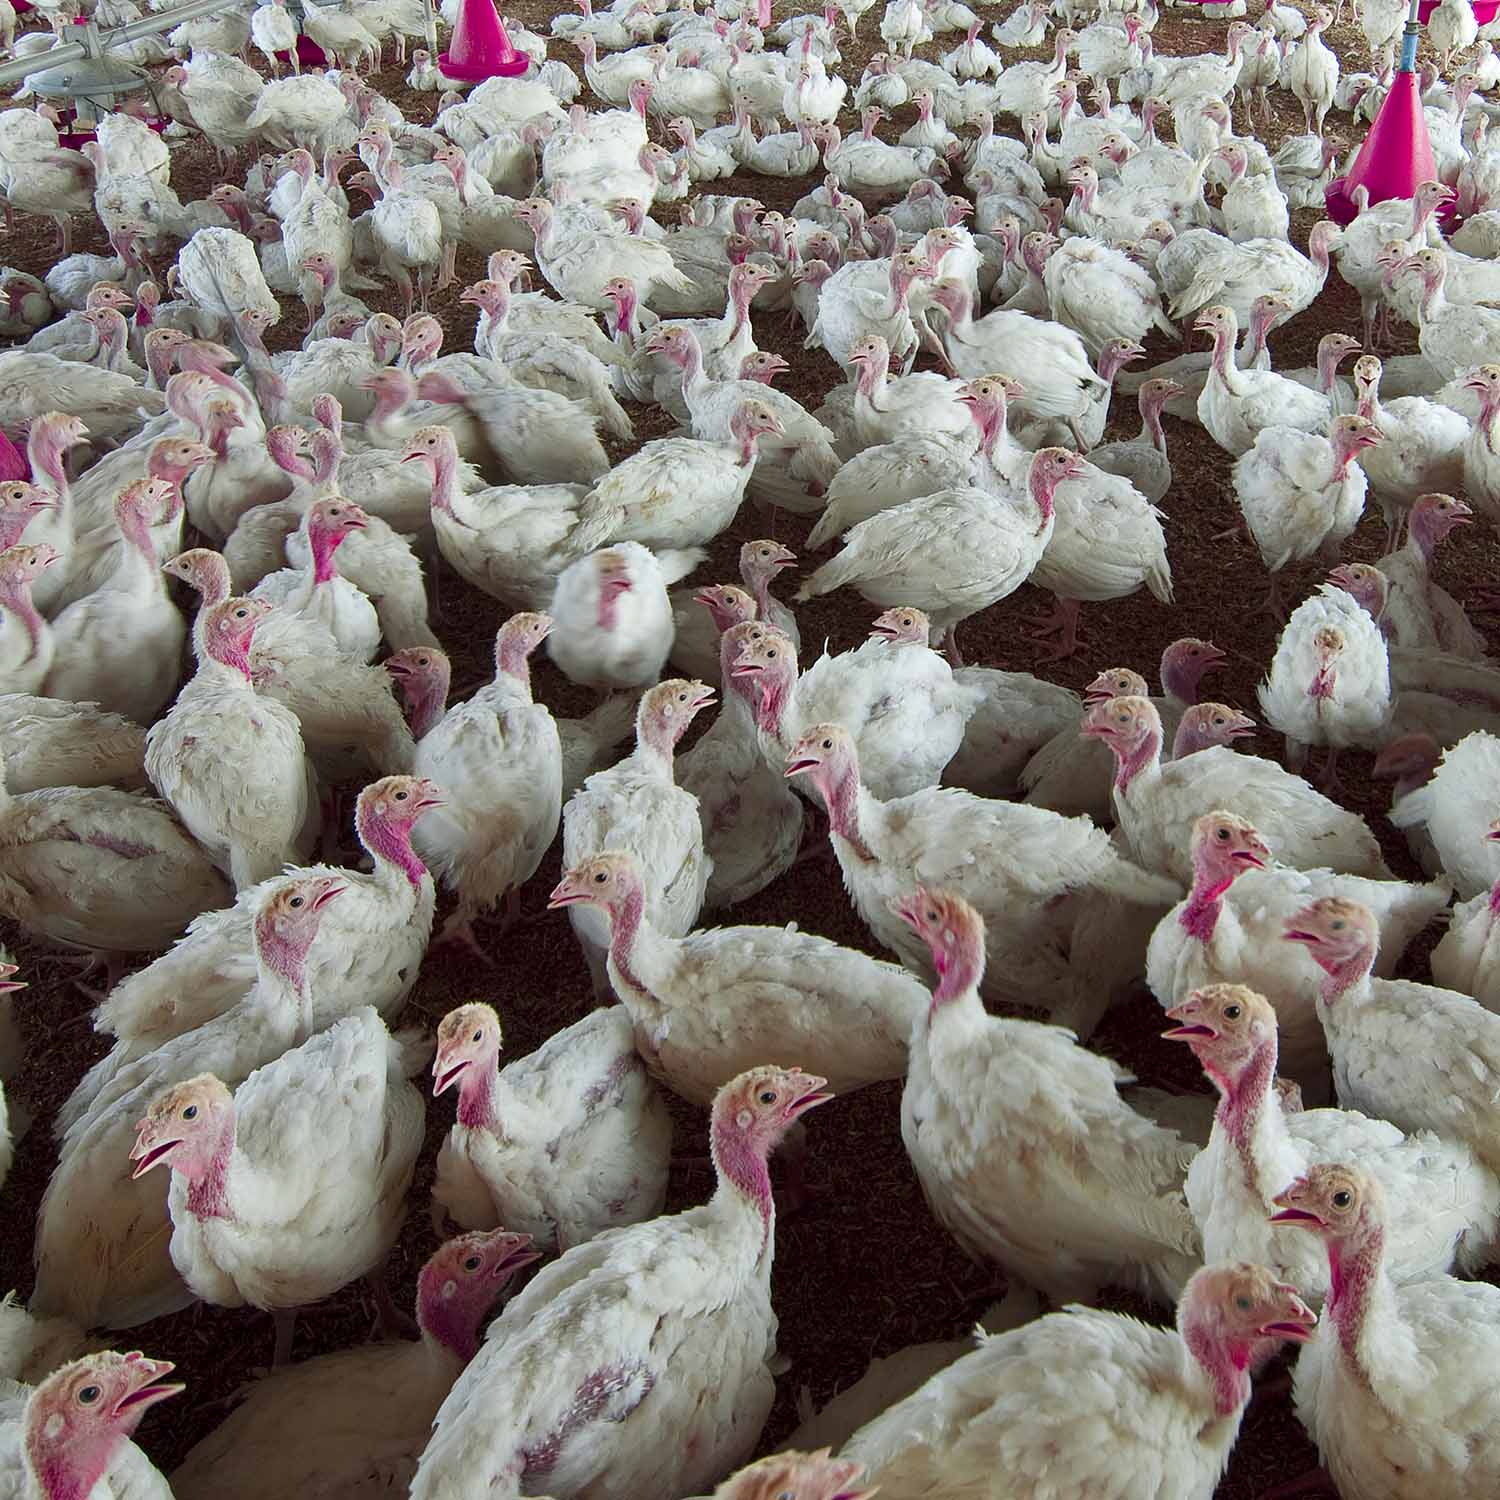 Animal Equality Files Complaint Against Major Turkey Producer